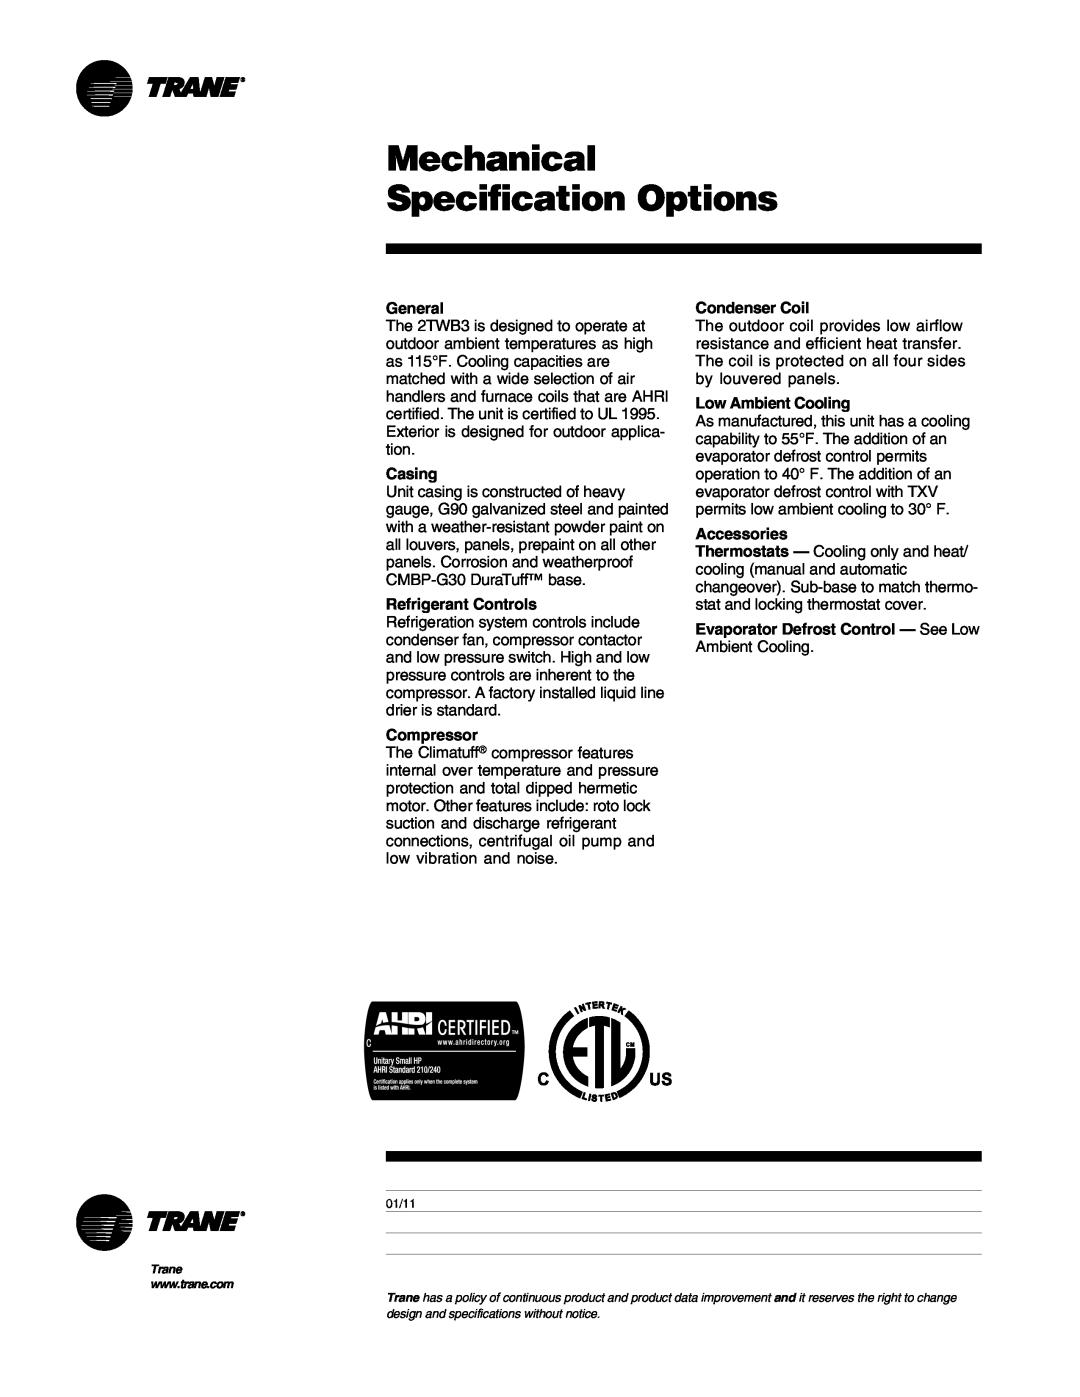 Trane 2TWB3018-060 Mechanical Specification Options, General, Casing, Refrigerant Controls, Compressor, Condenser Coil 